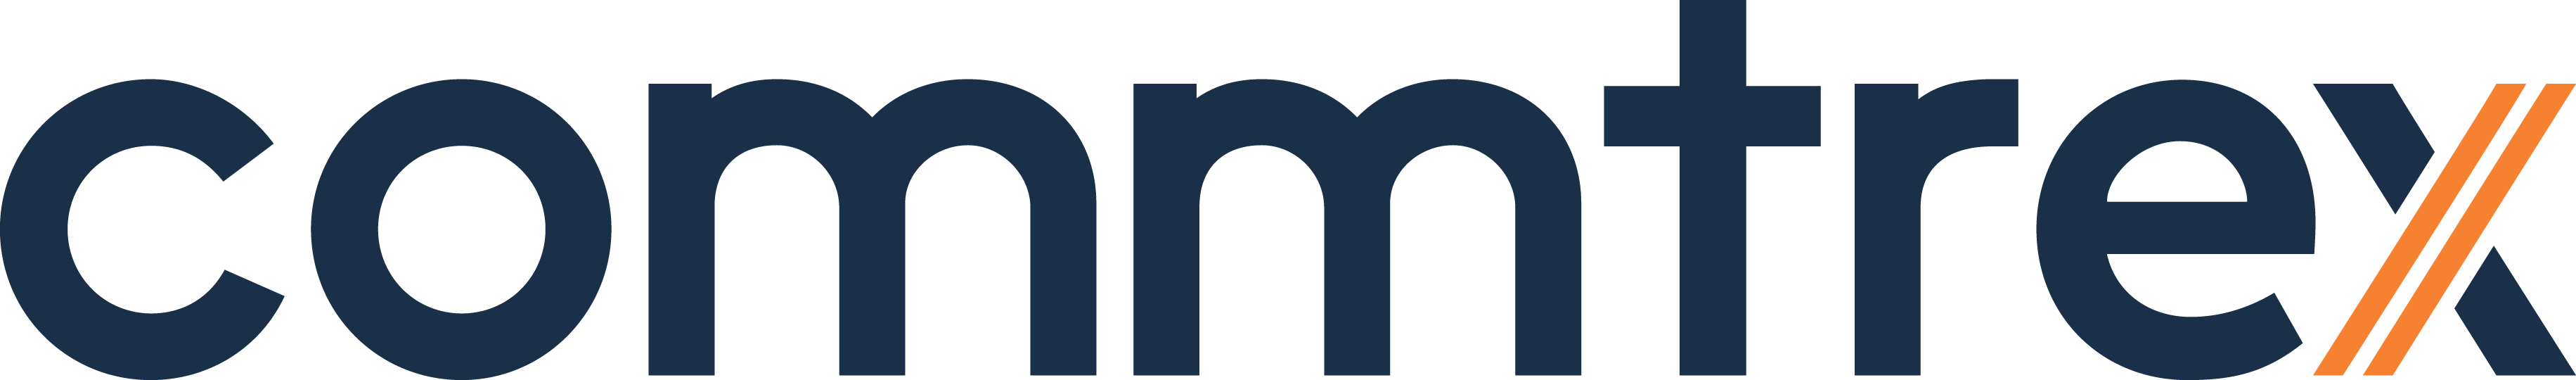 Blue Commtrex Logo (Transparent Background)